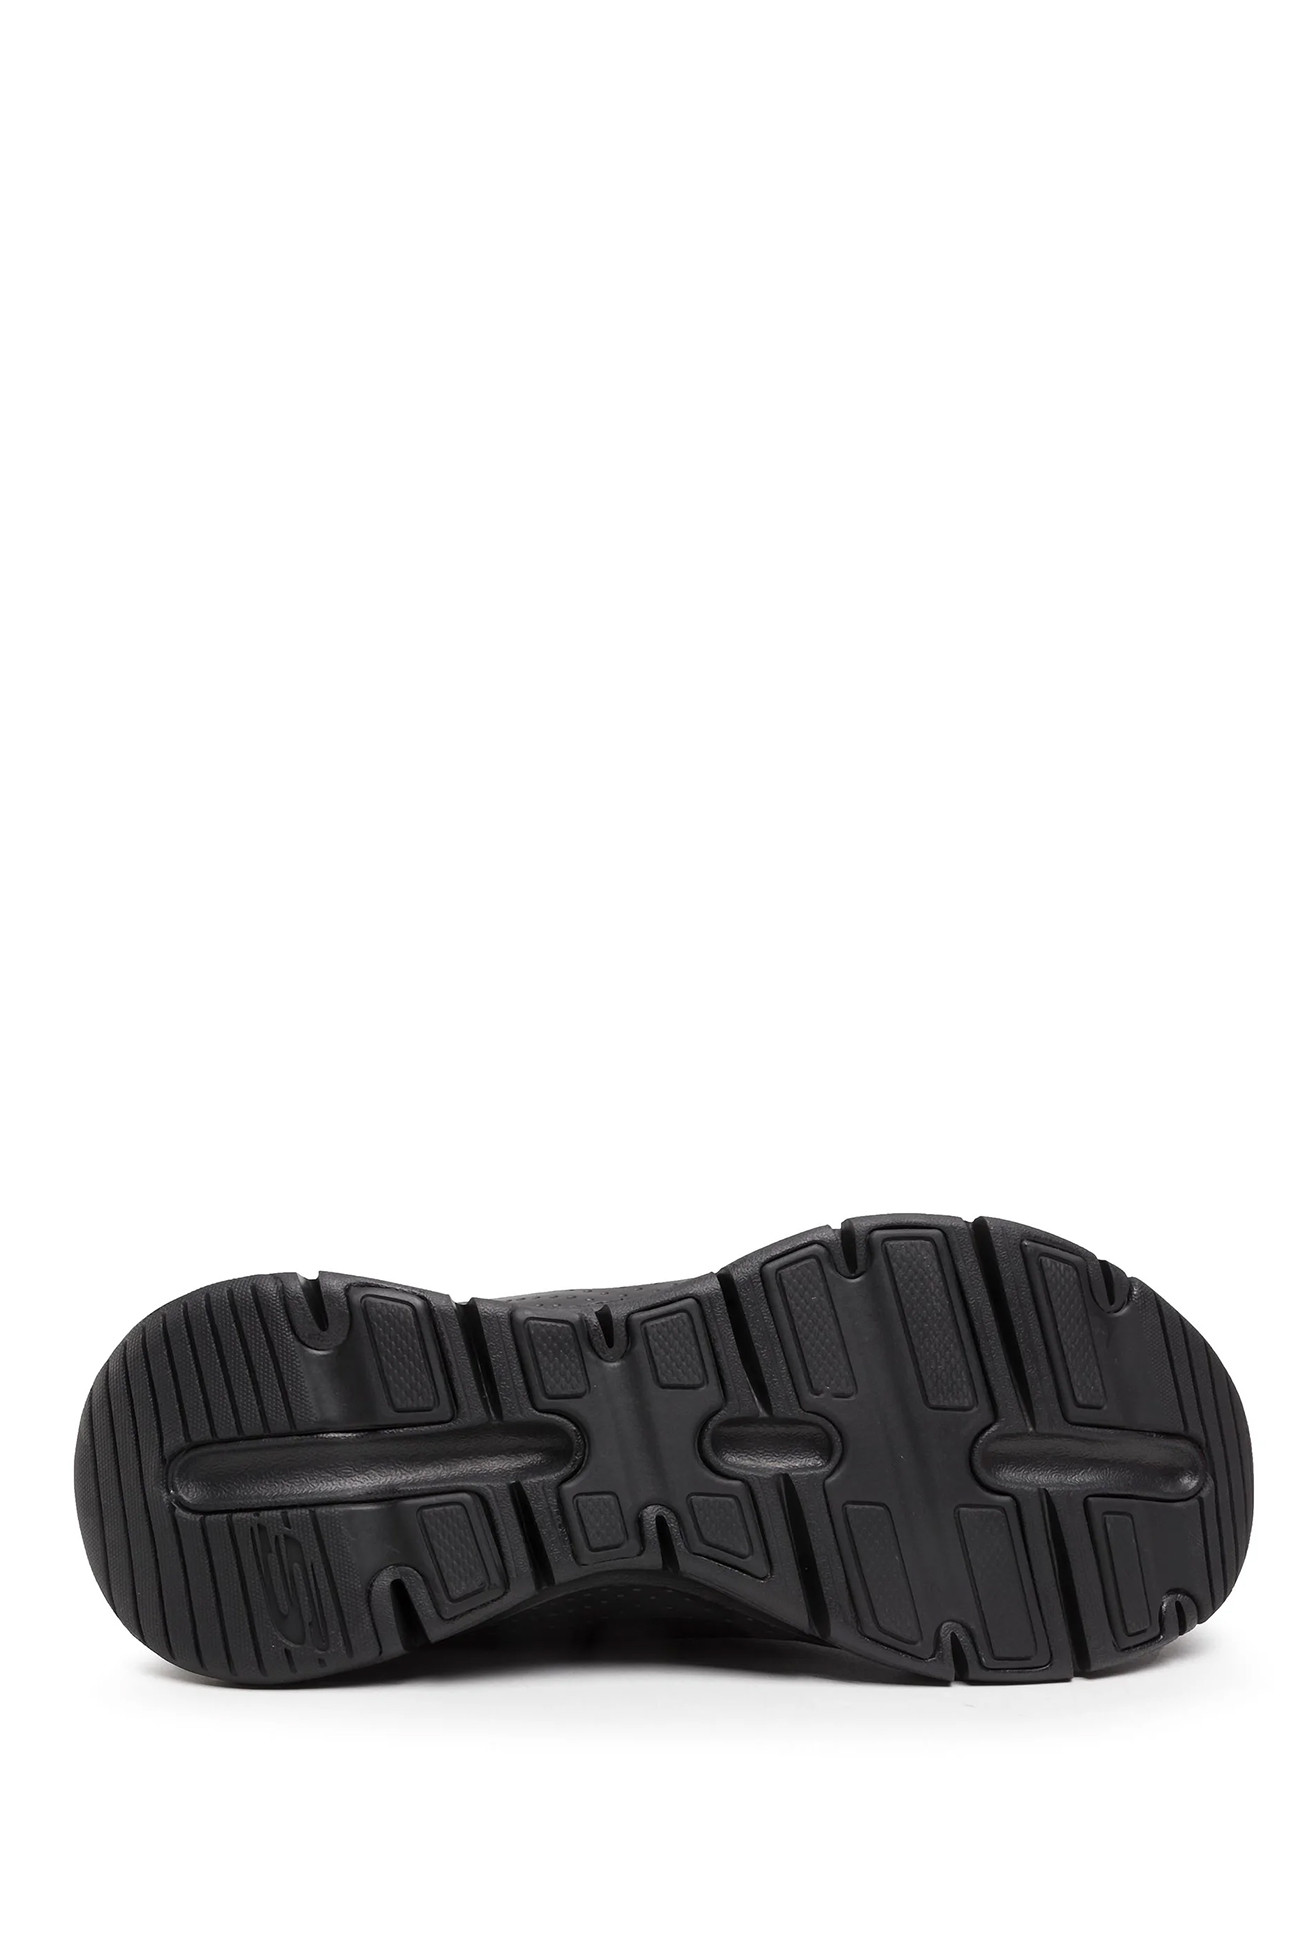 Кросівки жіночі Skechers Arch Fit - Sunny Outlook чорні 149057 BBK изображение 4